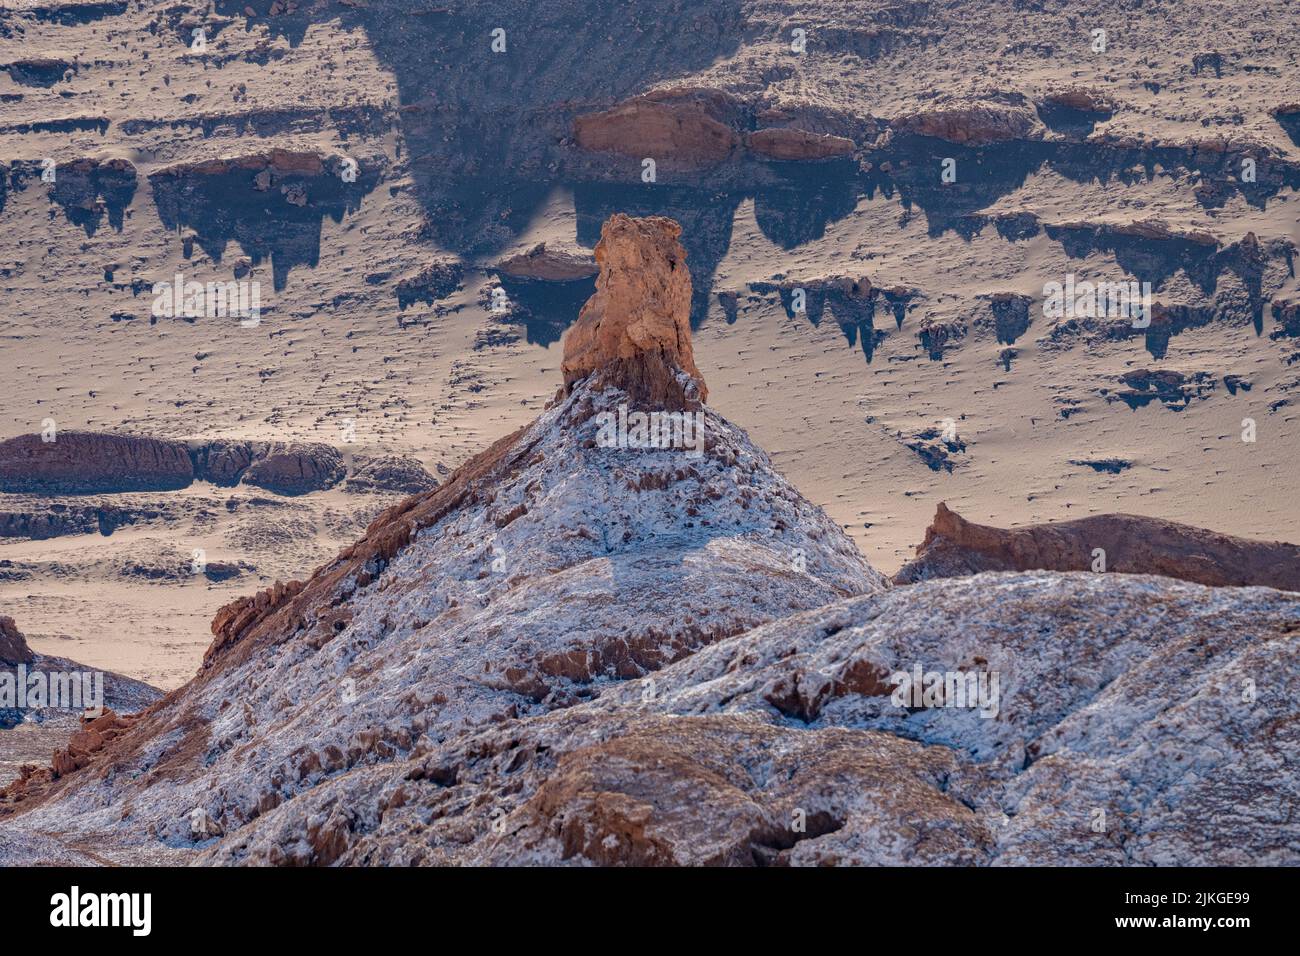 Salt deposits on siltstone rock formations in the Valley of the Moon or Valle de Luna near San Pedro de Atacama, Chile. Stock Photo